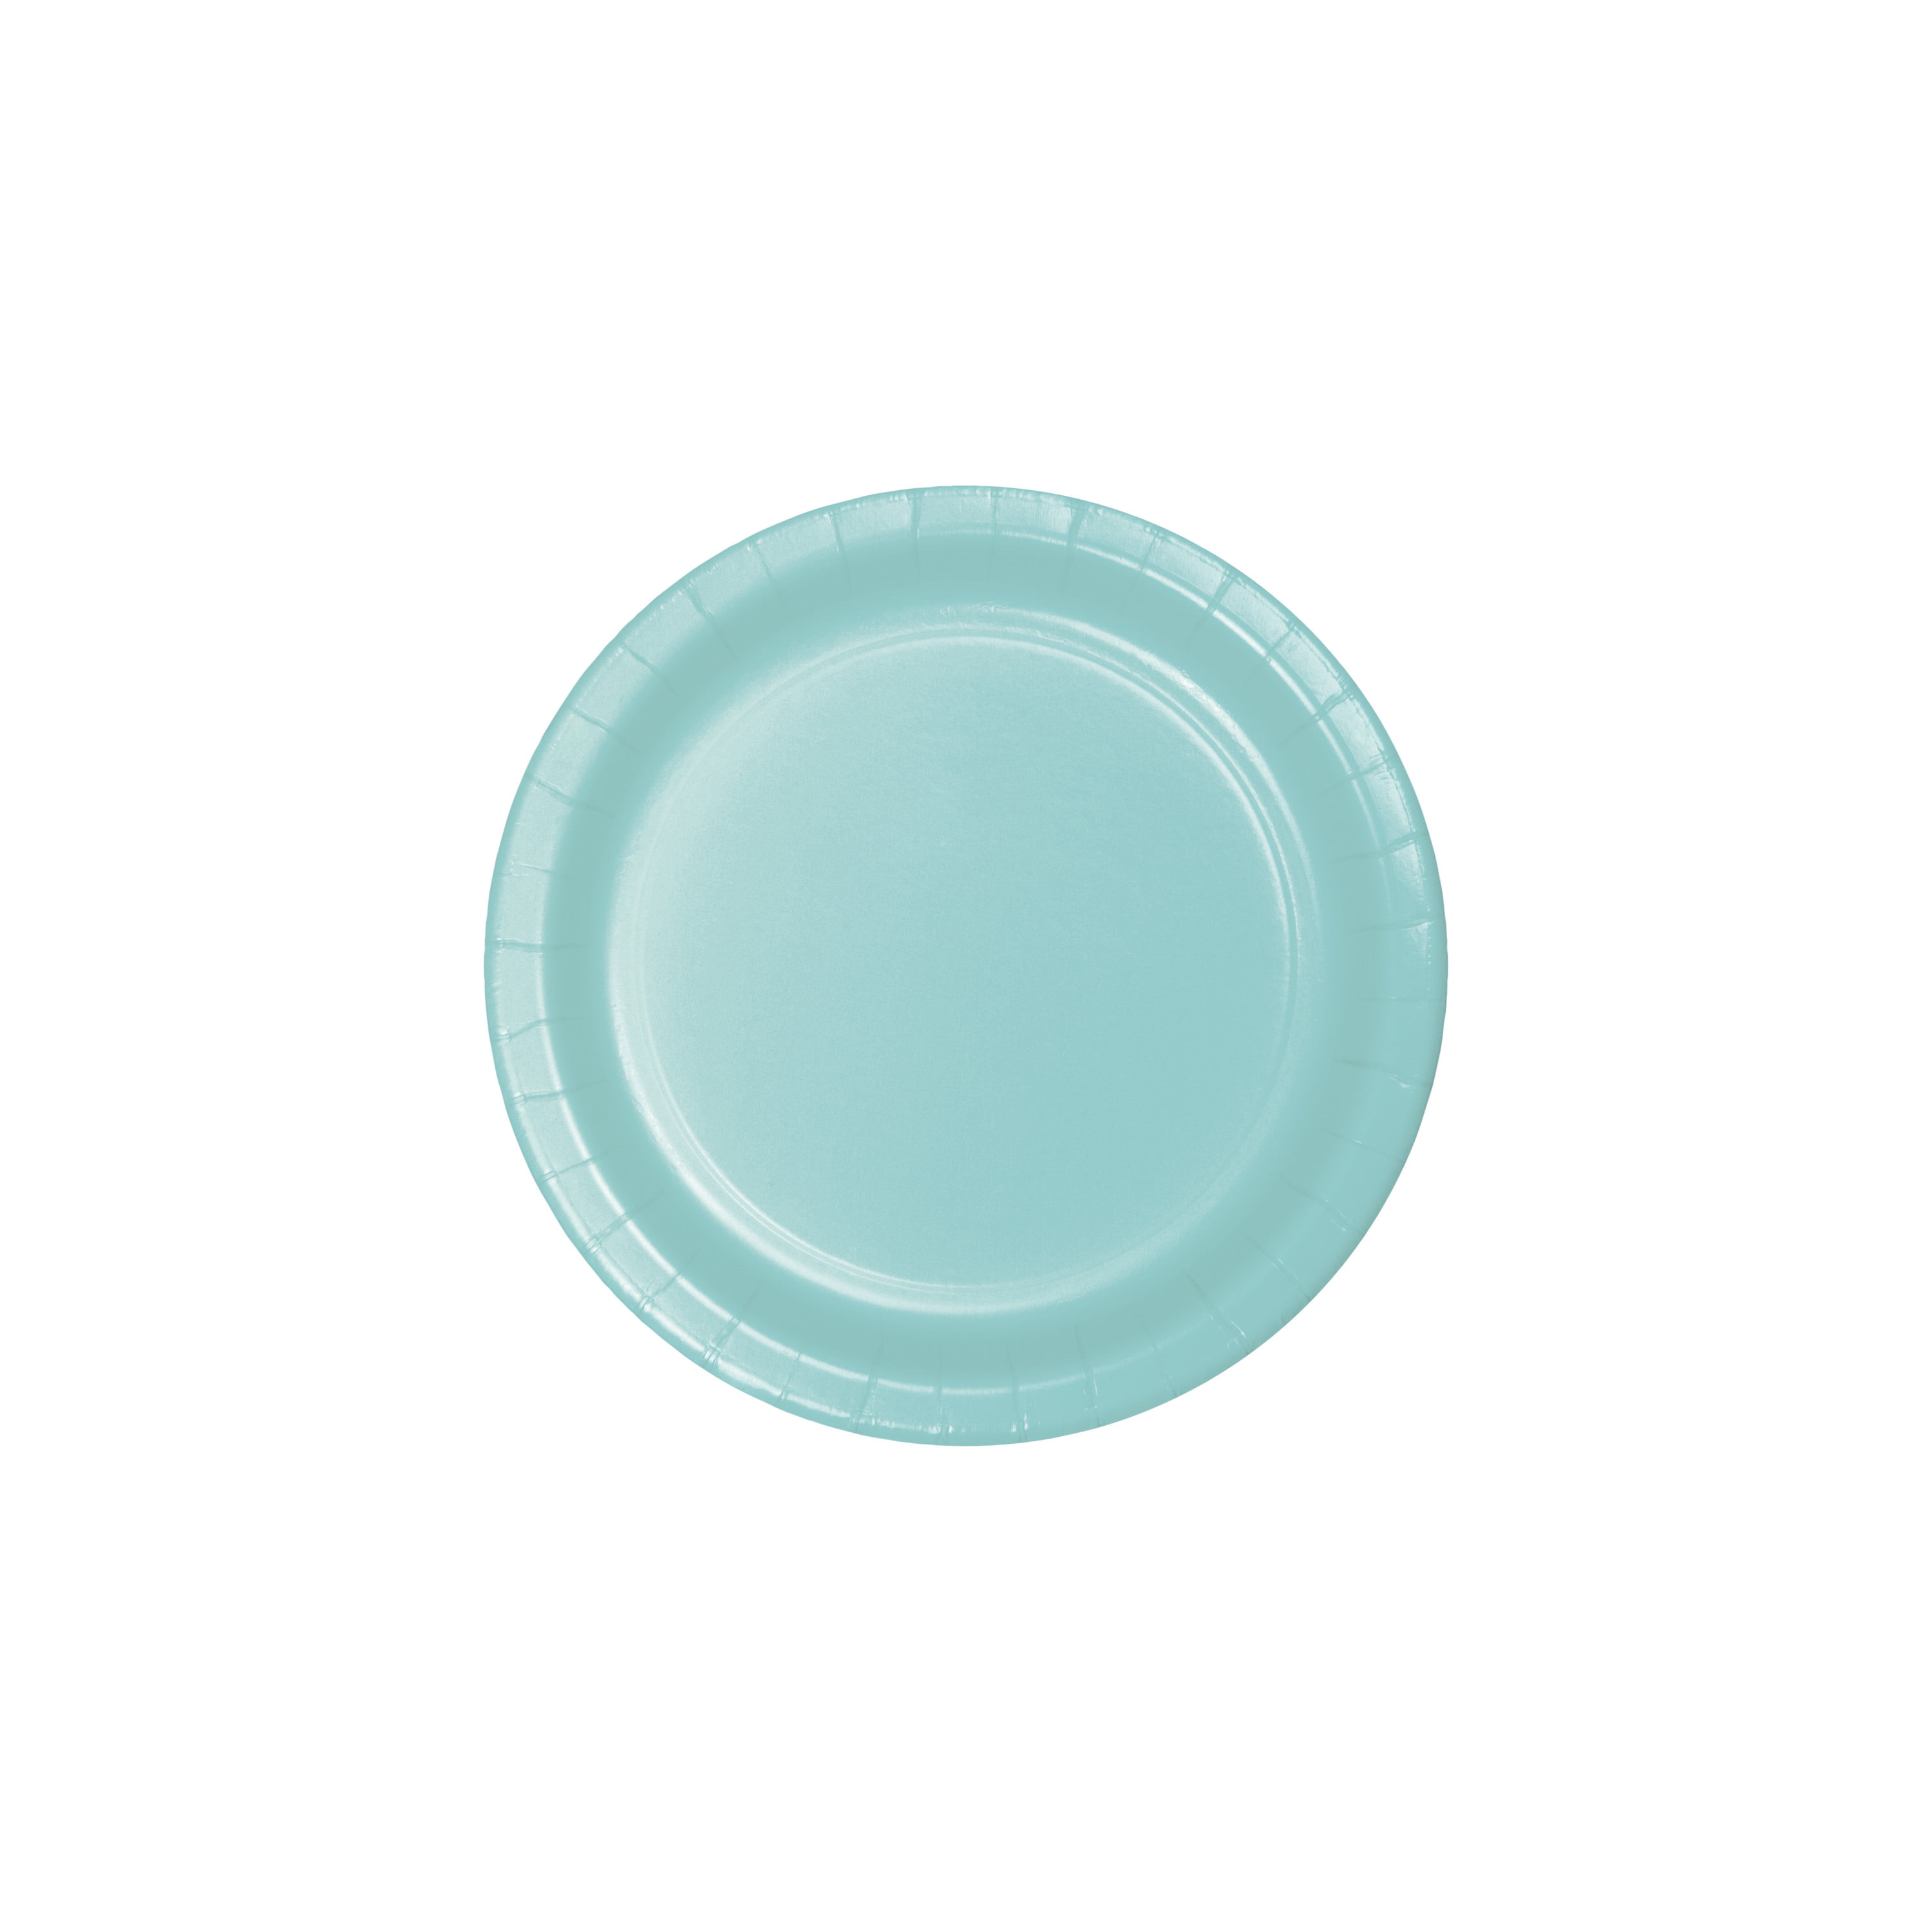 Details about   16pc Blue & White Floral Dinnerware Set Kitchen Dinner Plate Bowl Dish Flower 